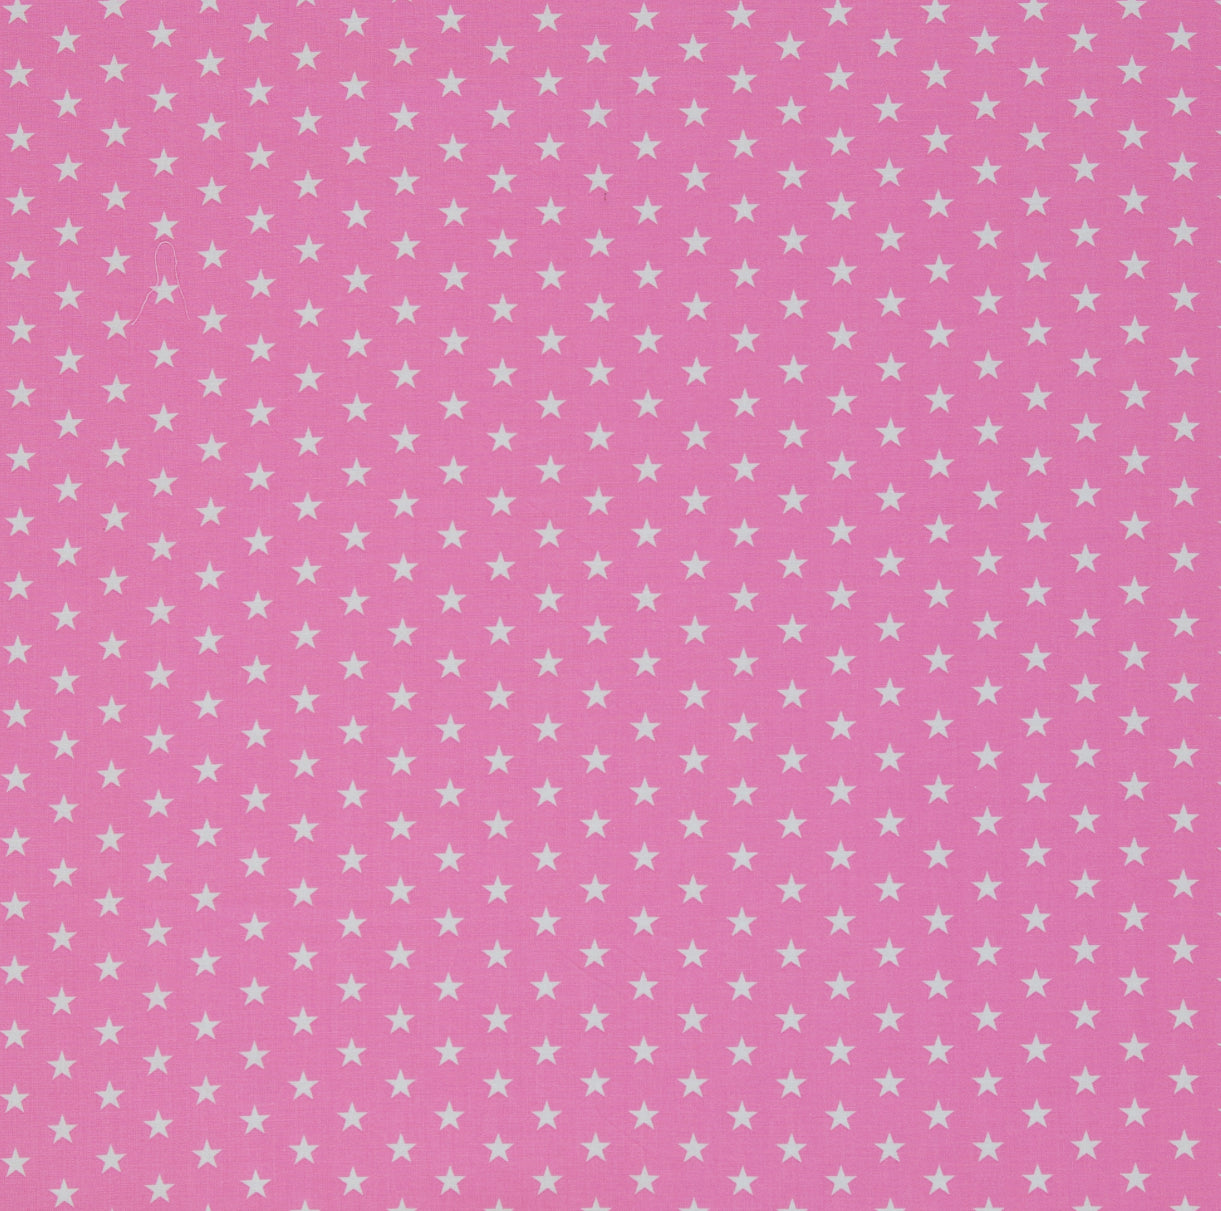 Baumwolle Sterne rosa 1m